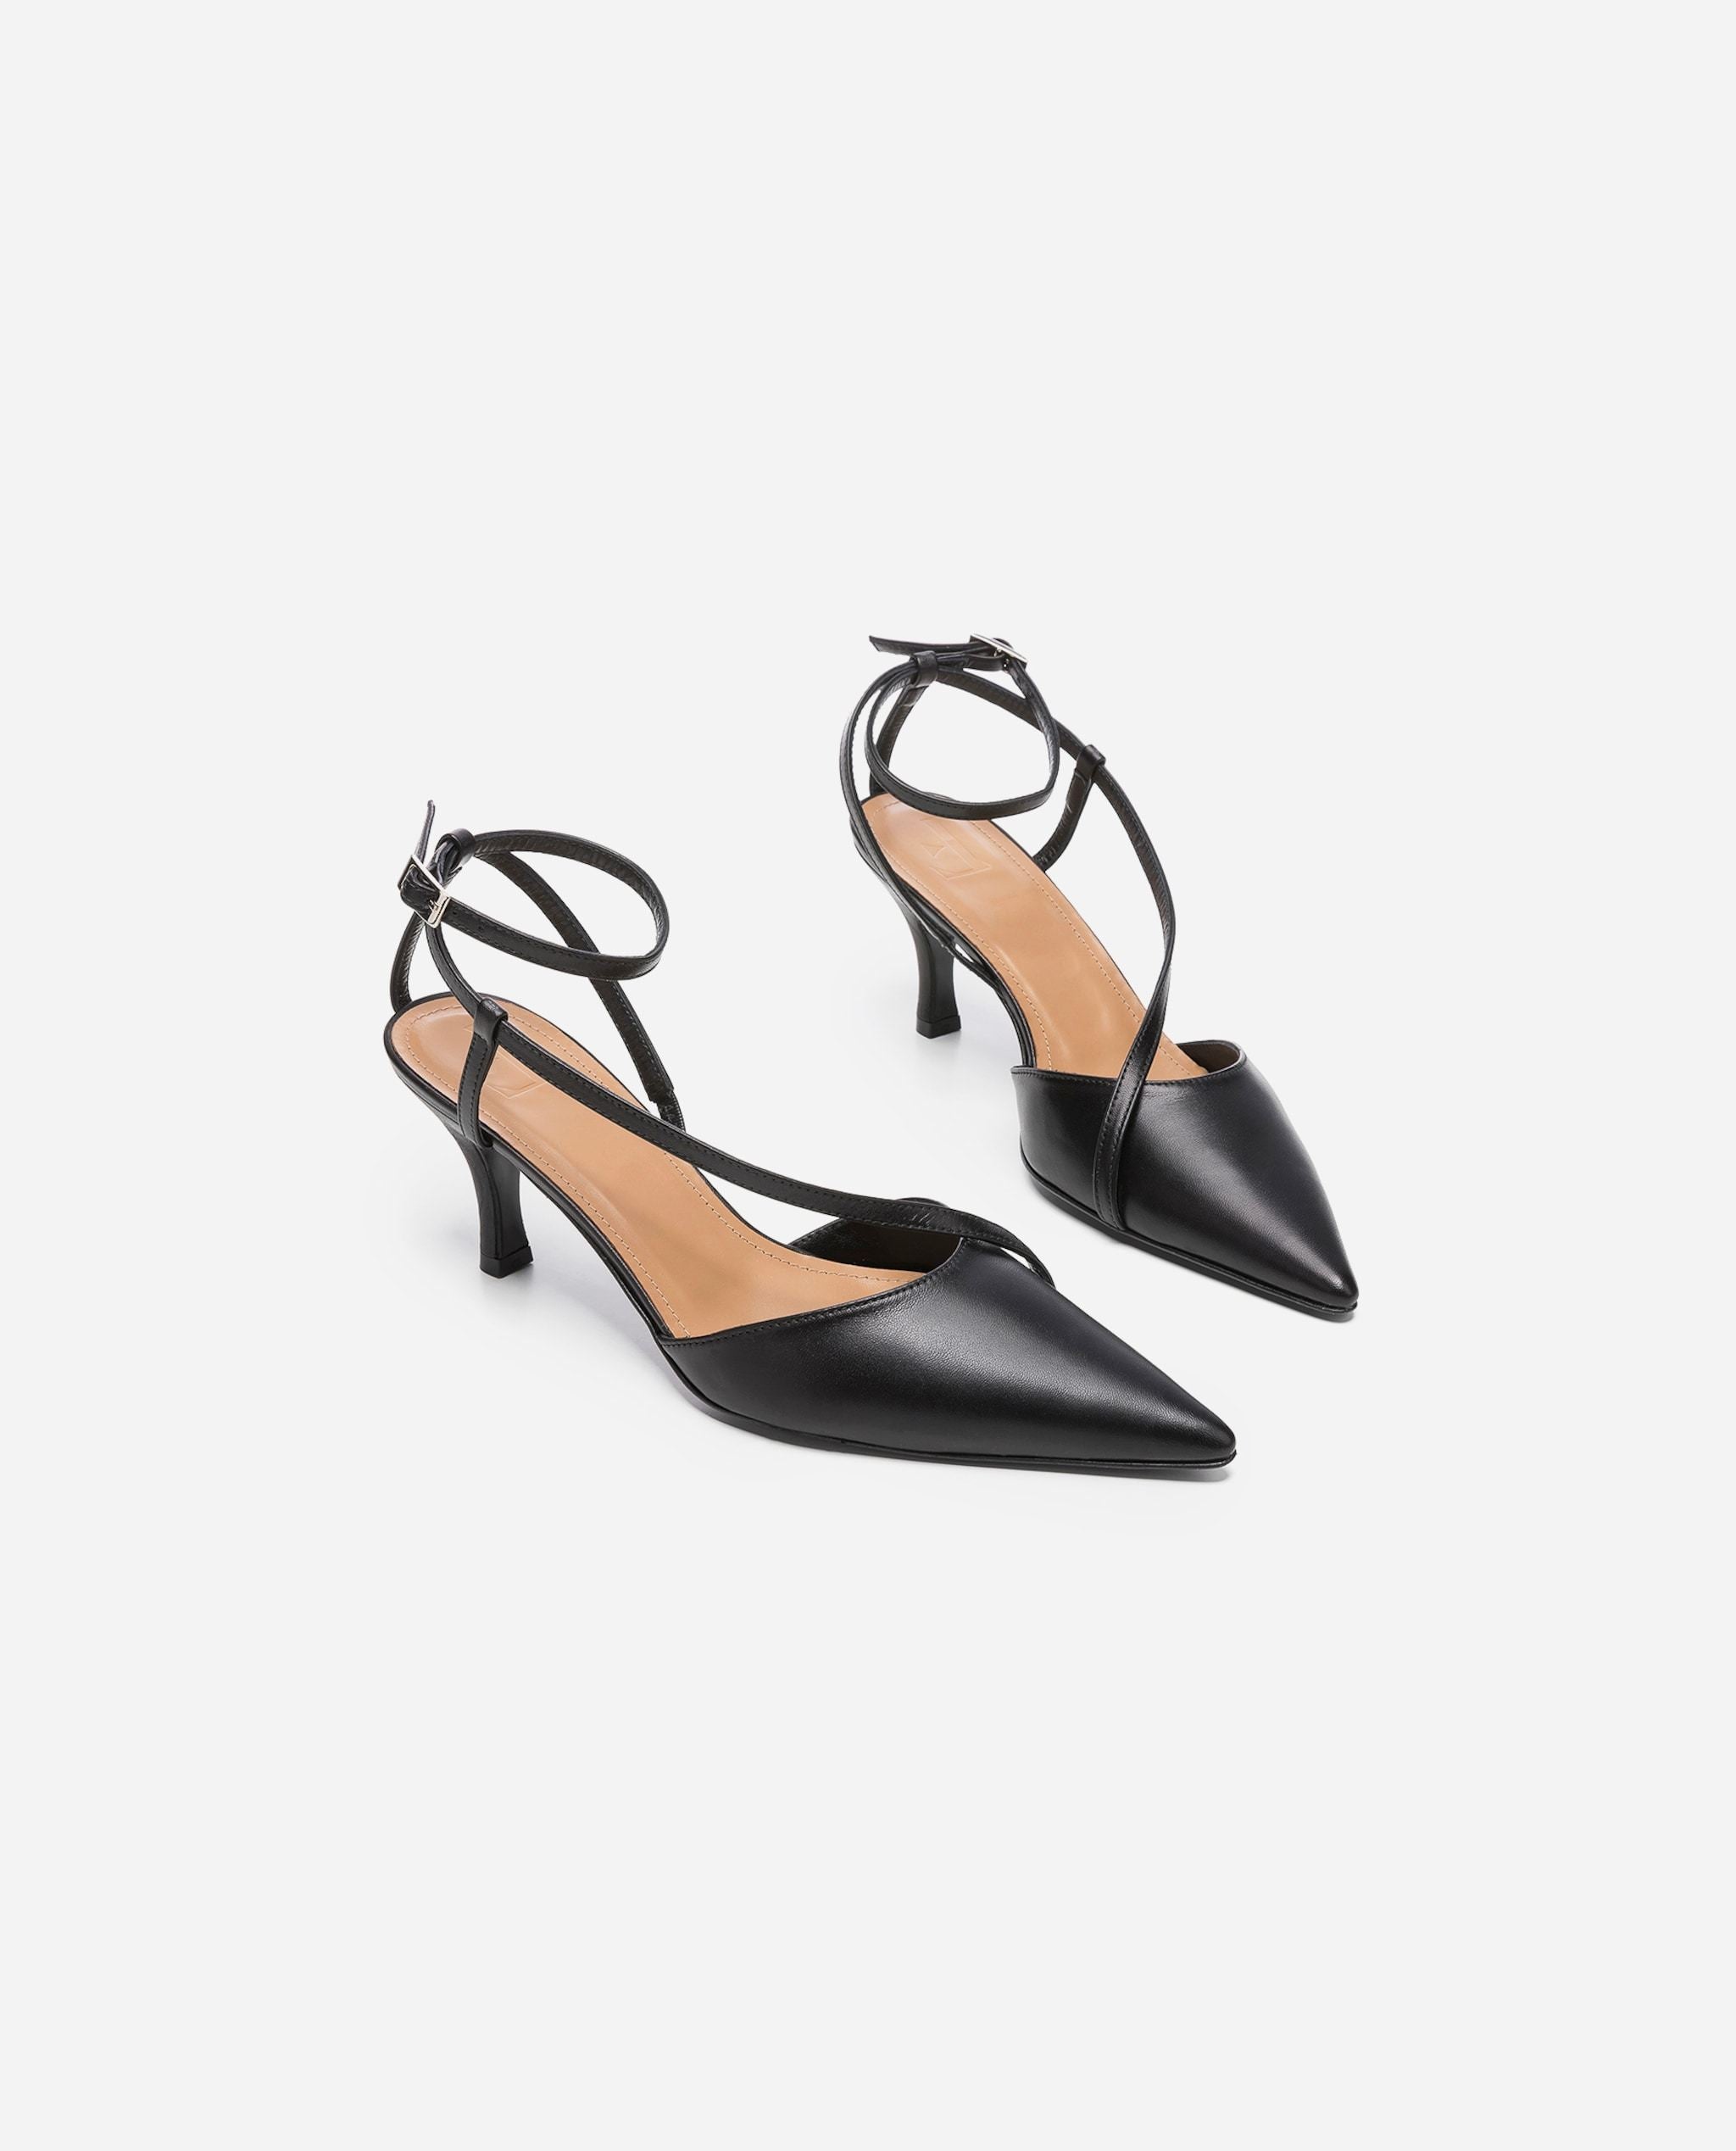 Fay Leather Black Heeled Shoes Heels 20010411601-001 - 3